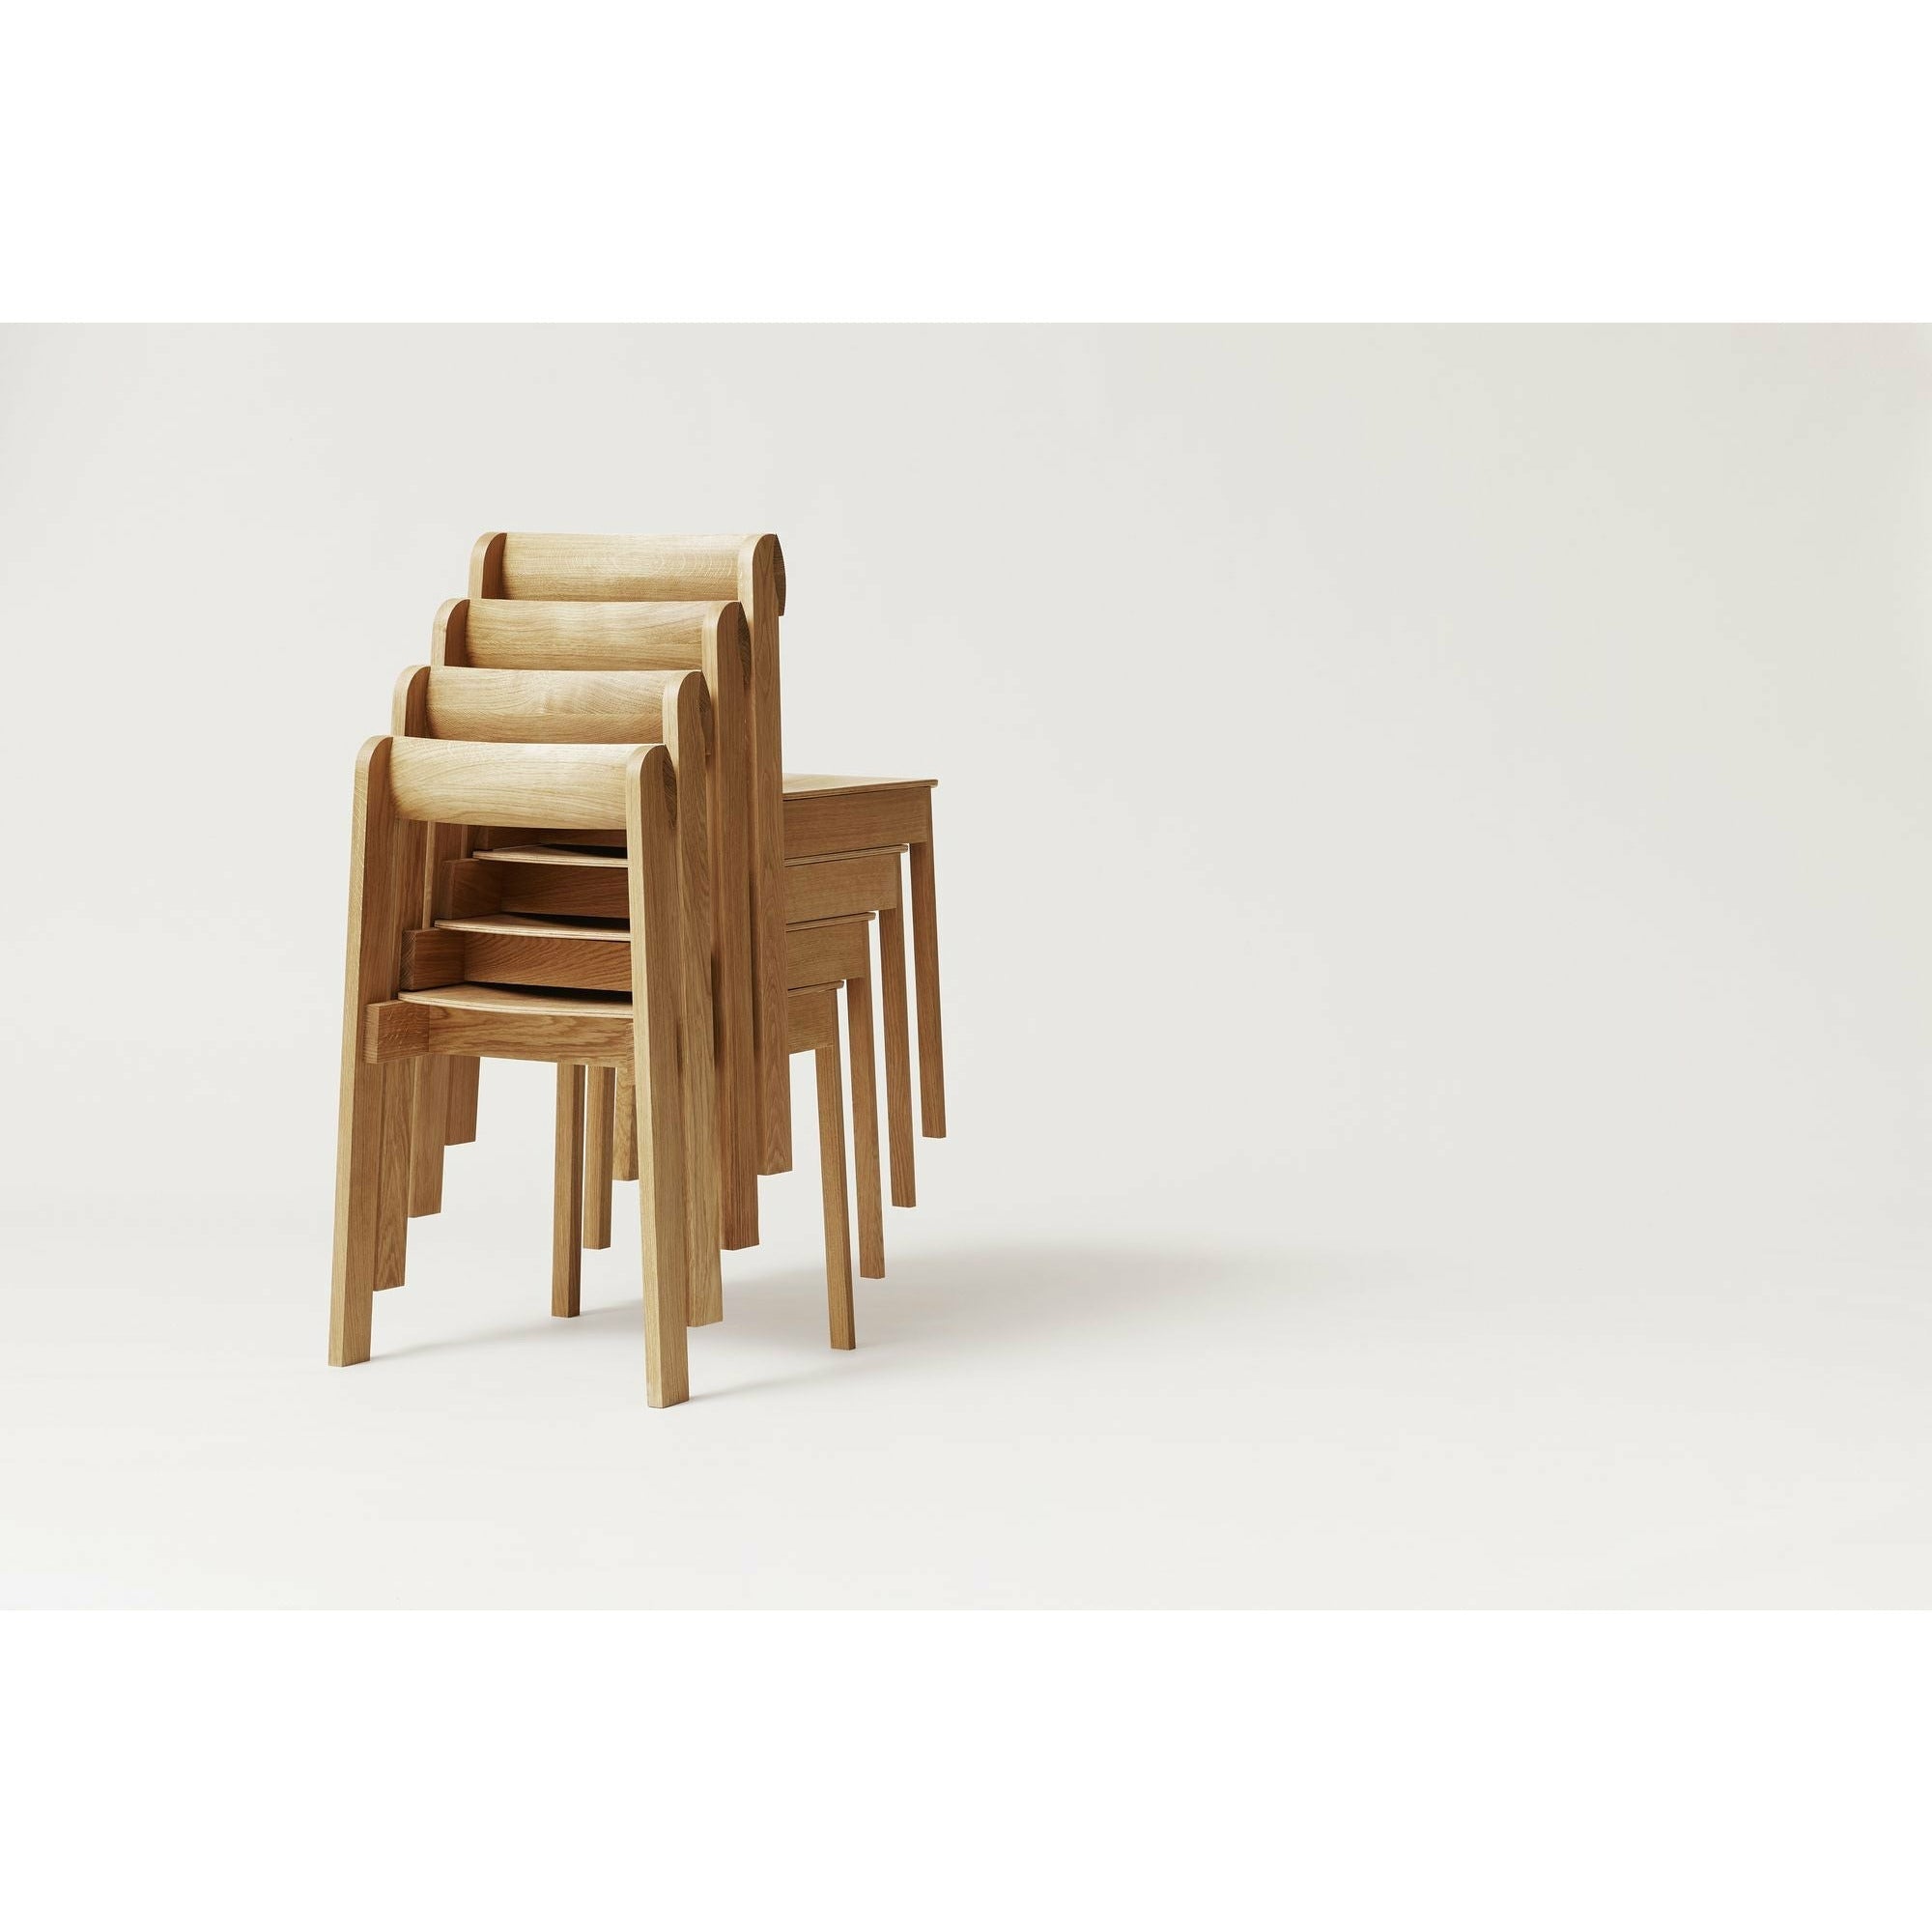 Form & Refine Blueprint Chair. Oak